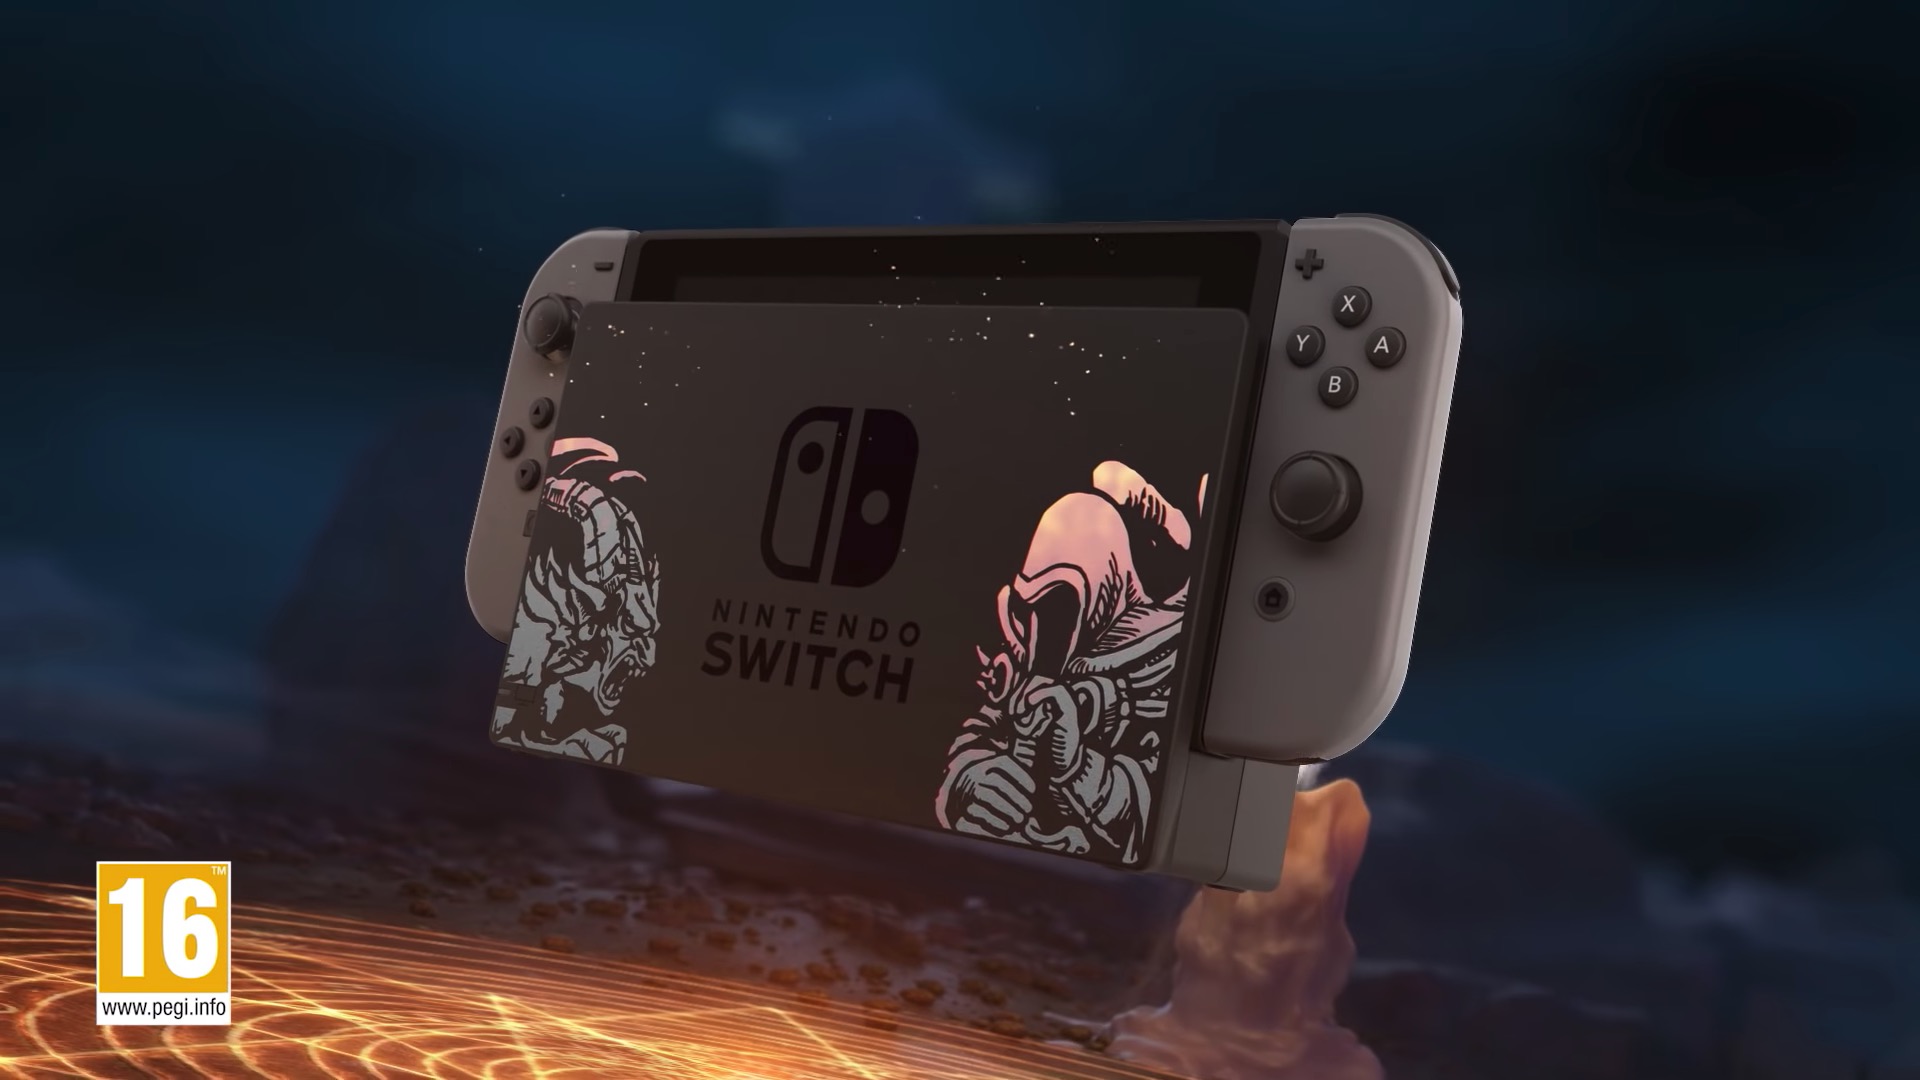 Nintendo switch diablo 3. Nintendo Switch Diablo III Limited Edition. Диабло на Нинтендо свитч. Лимитированные Nintendo Switch. Diablo 2 Nintendo Switch.